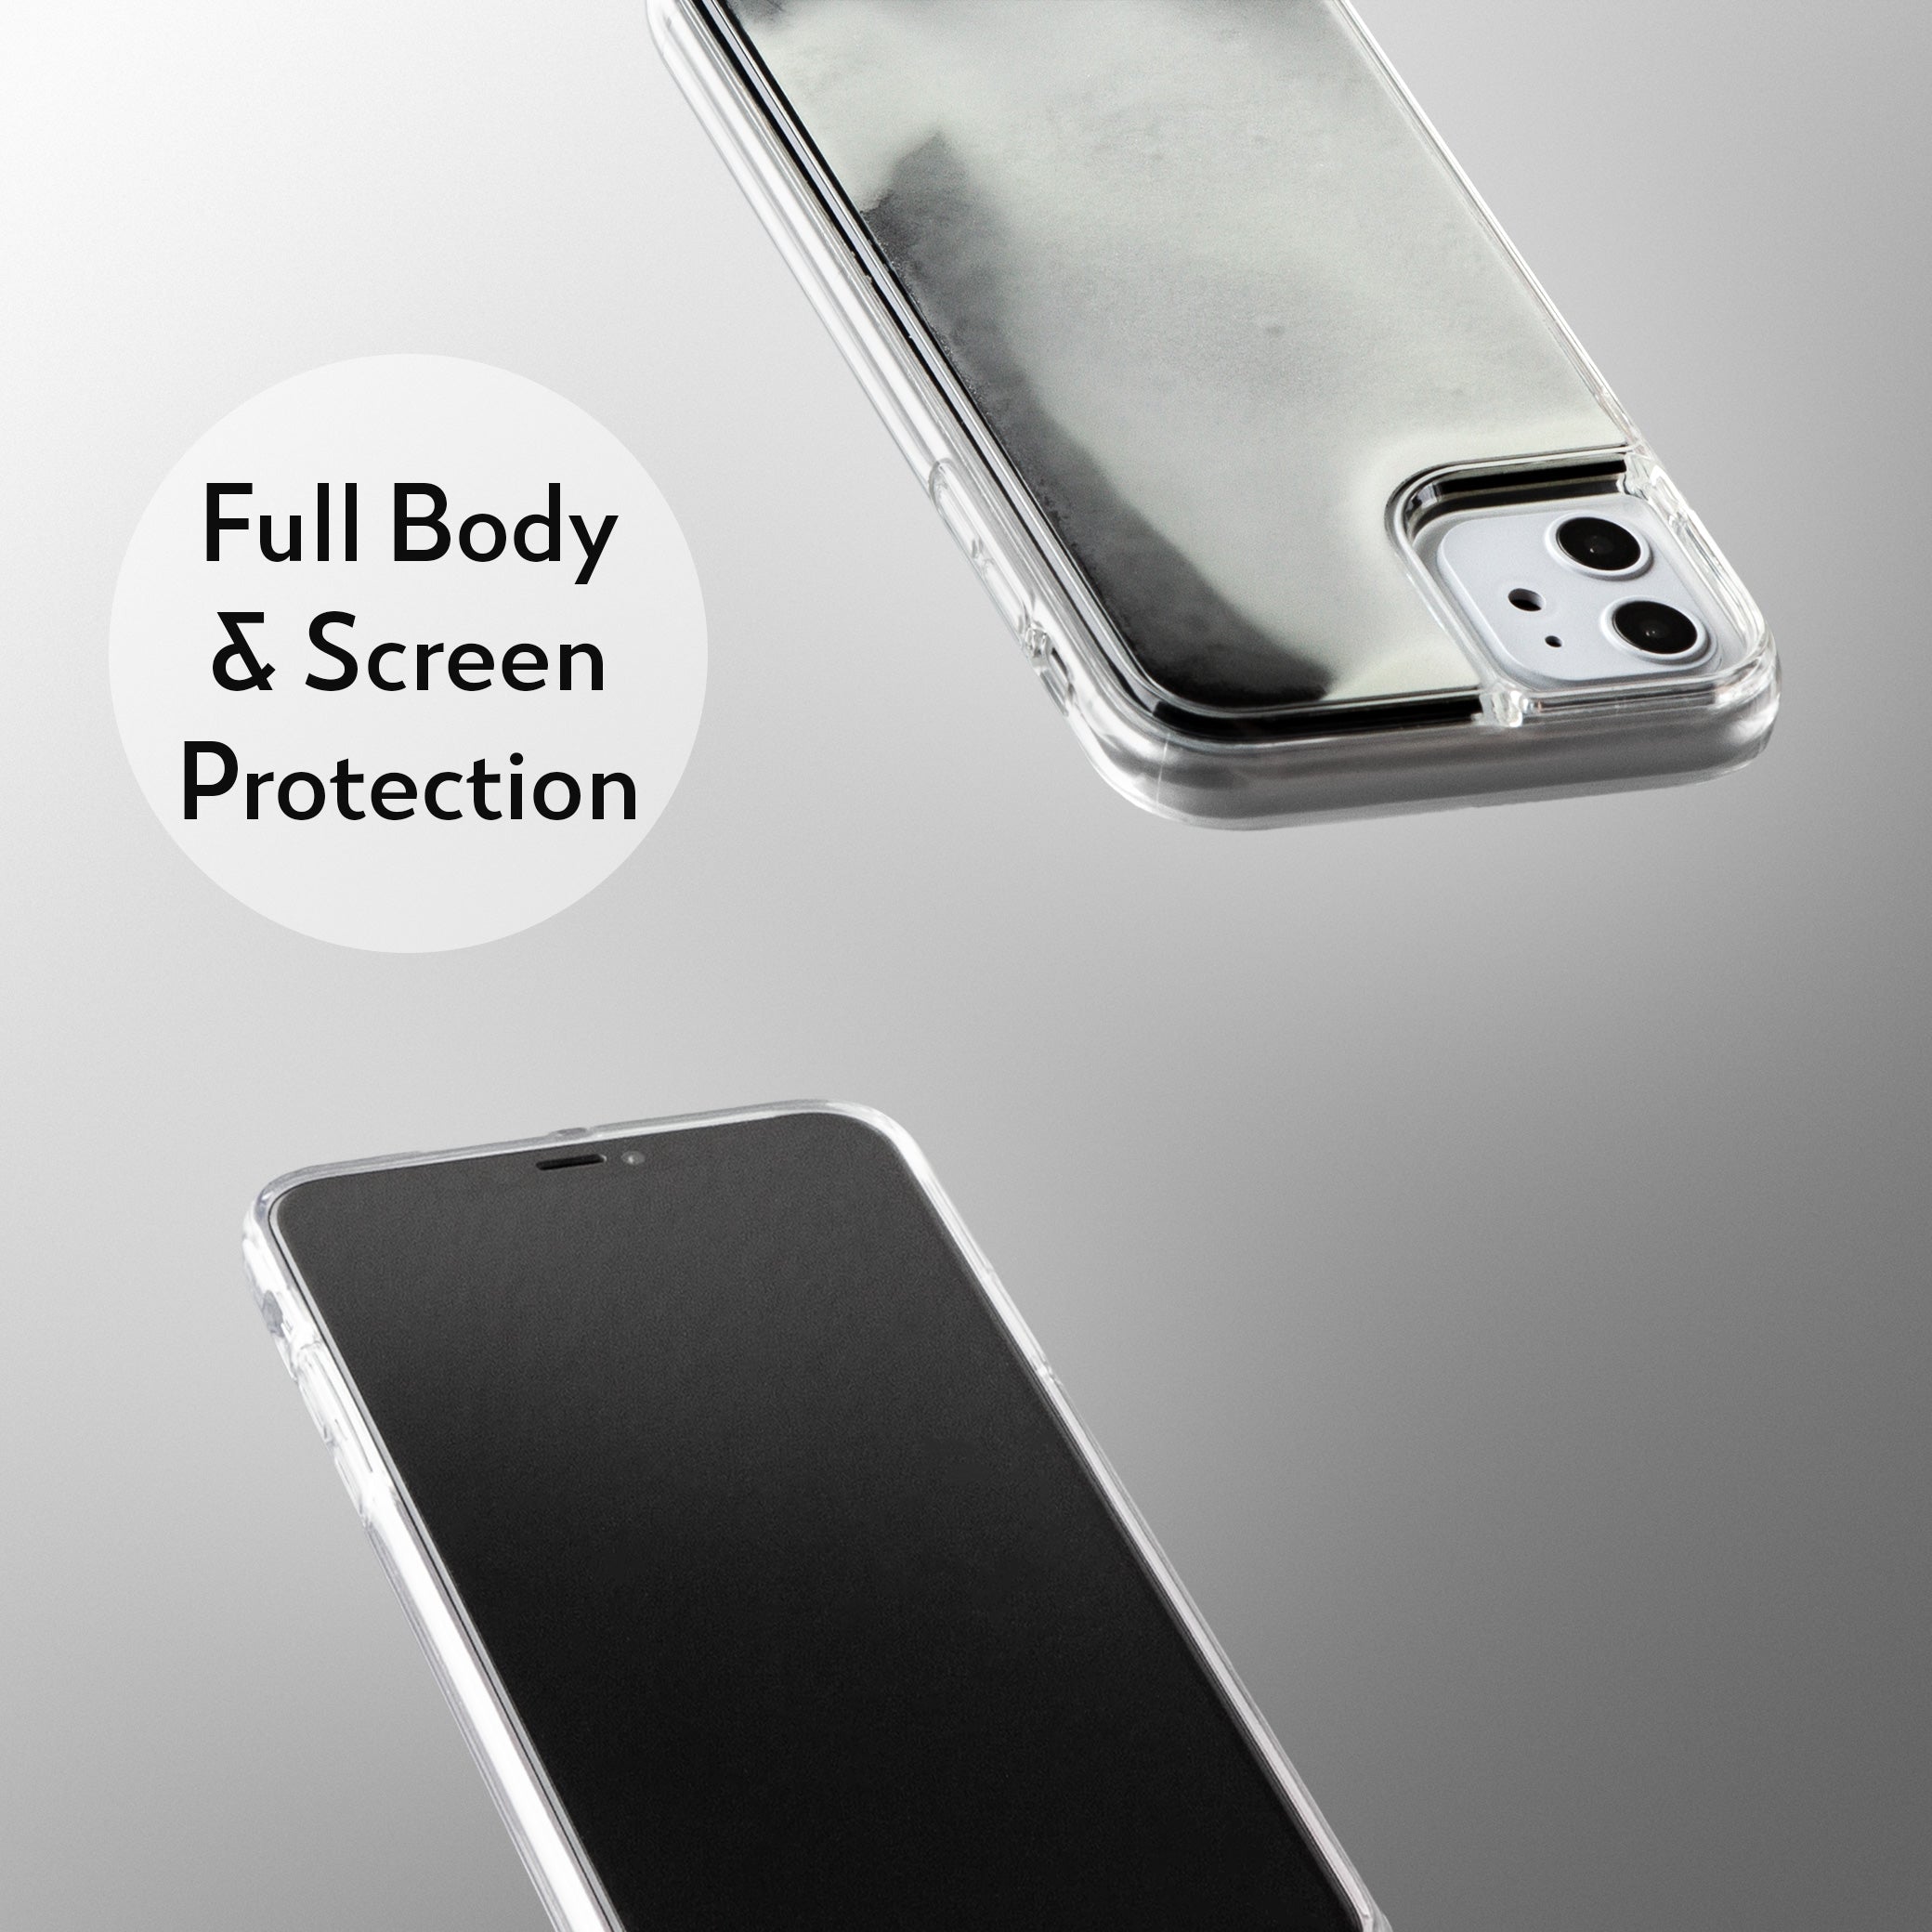 Neon Sand iPhone 11 Case - Hi Contrast Black n White